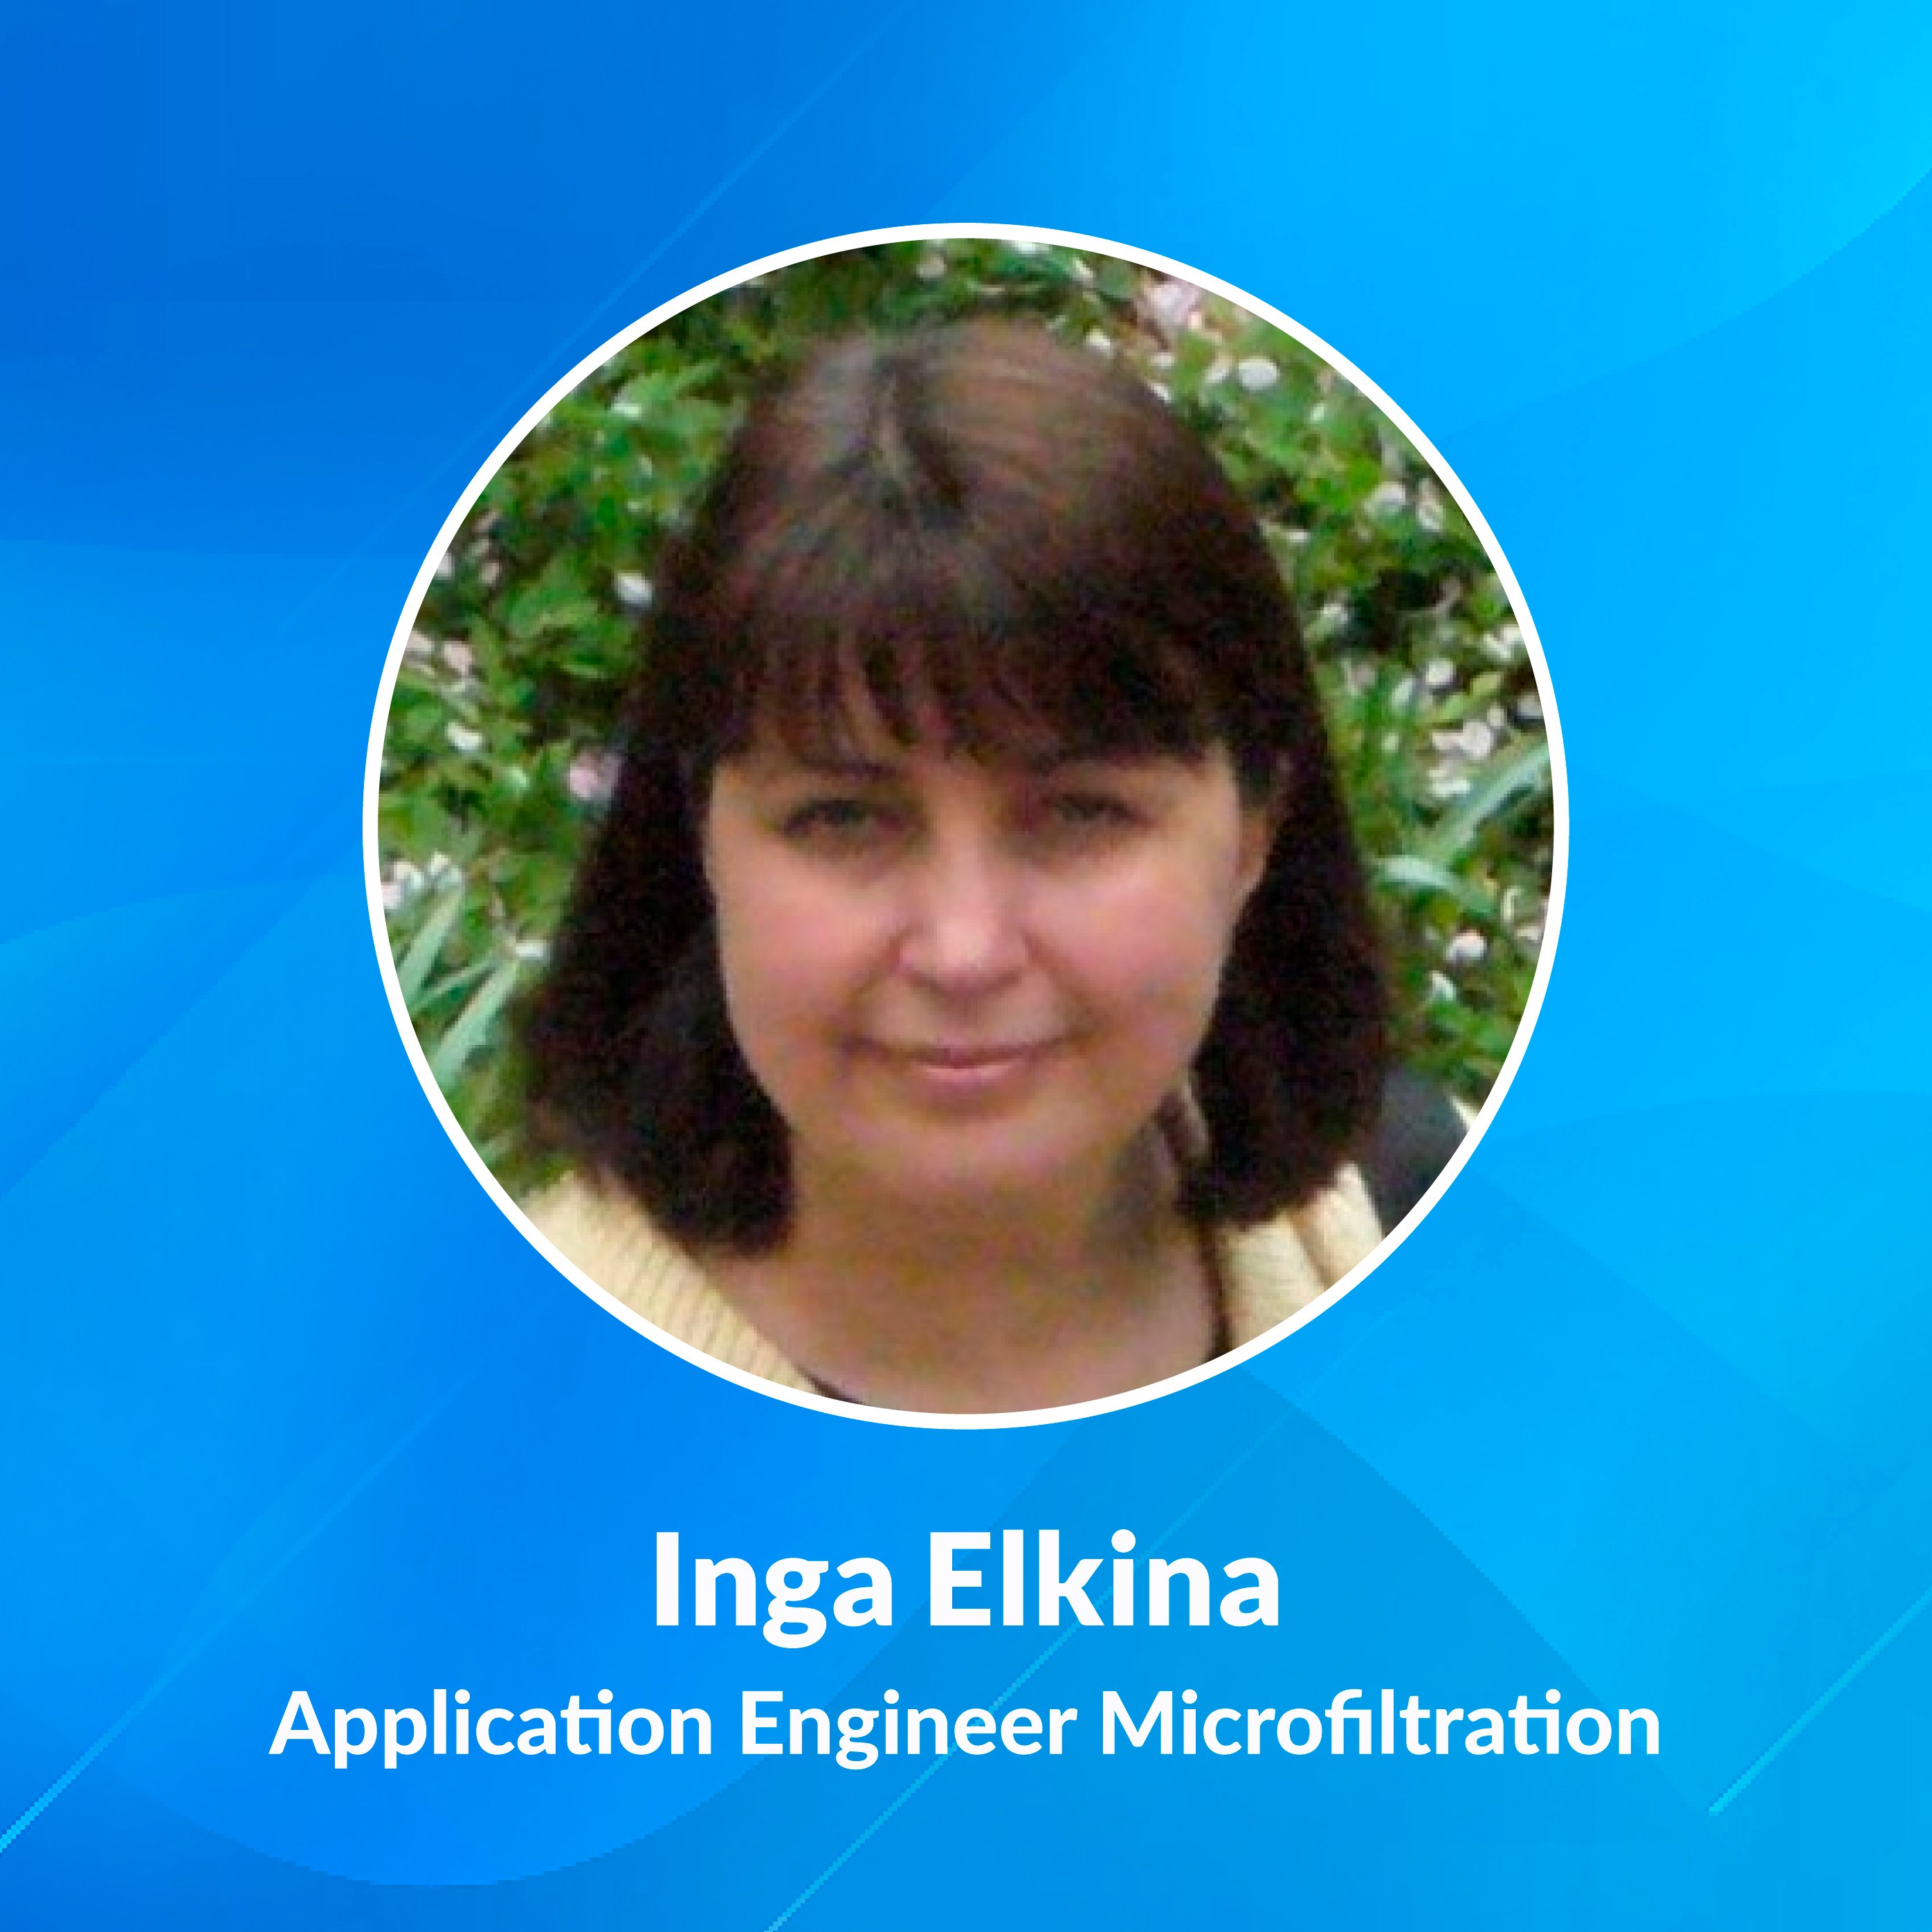 Welcome Inga Elkina, Application Engineer Microfiltration